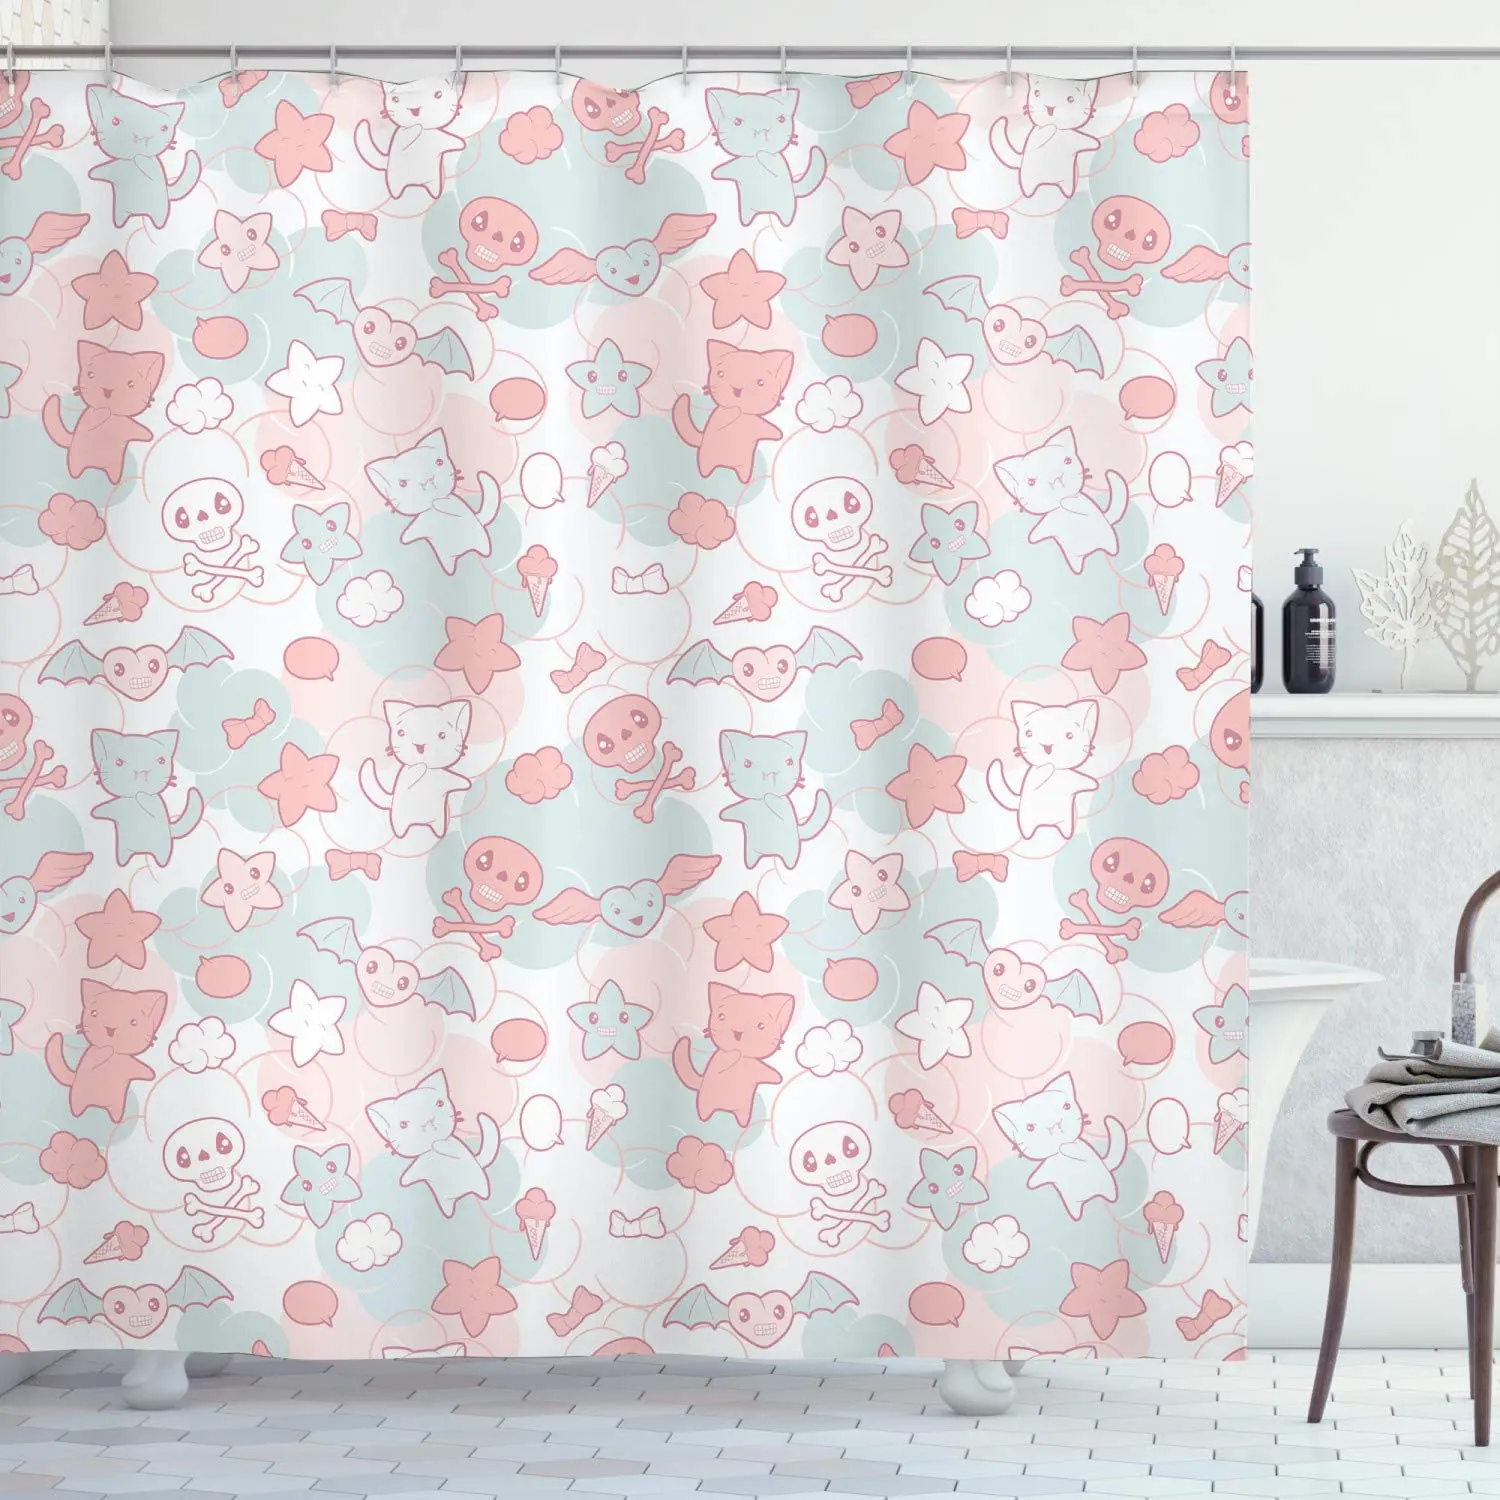 Nursery Shower Curtain, Cartoon Styled Cats Bats and Skulls Japanese Inspired Kawaii Design, Cloth Fabric Bathroom Dec